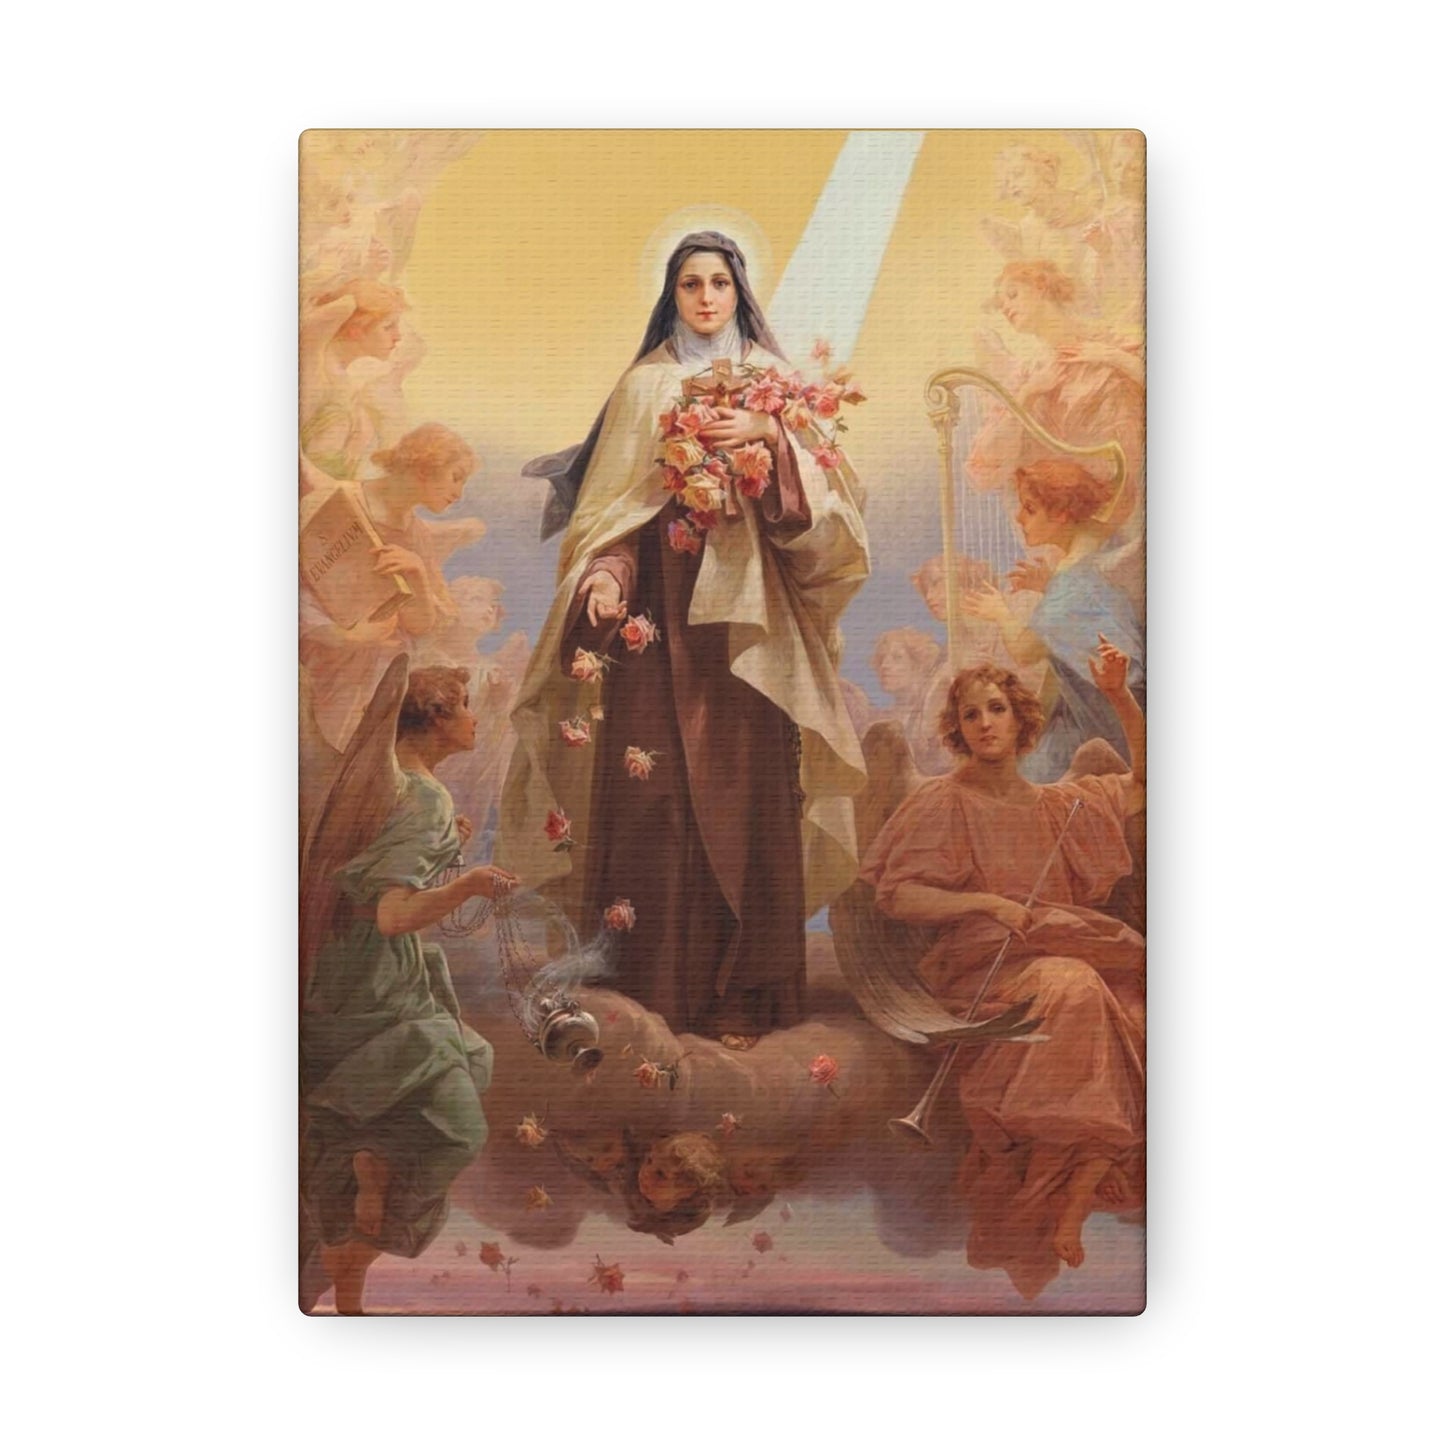 St. Thérèse of Lisieux The Little Flower Canvas Print, Catholic Saint Artwork for Christmas Gift.